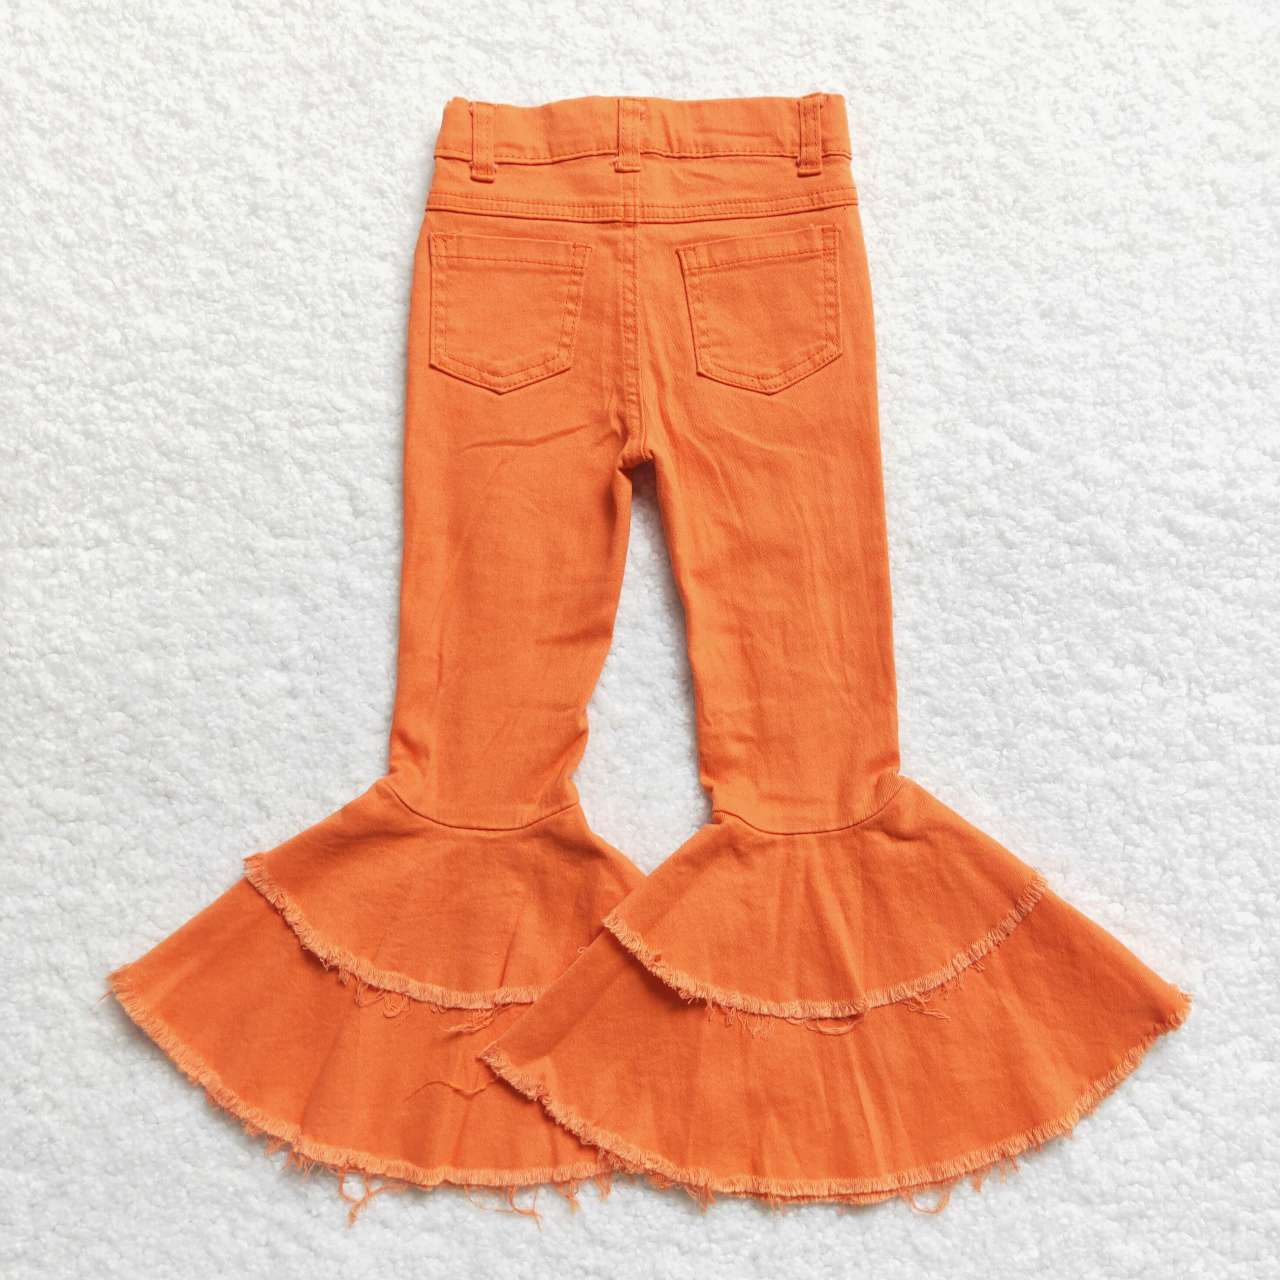 orange flare jeans denim pants